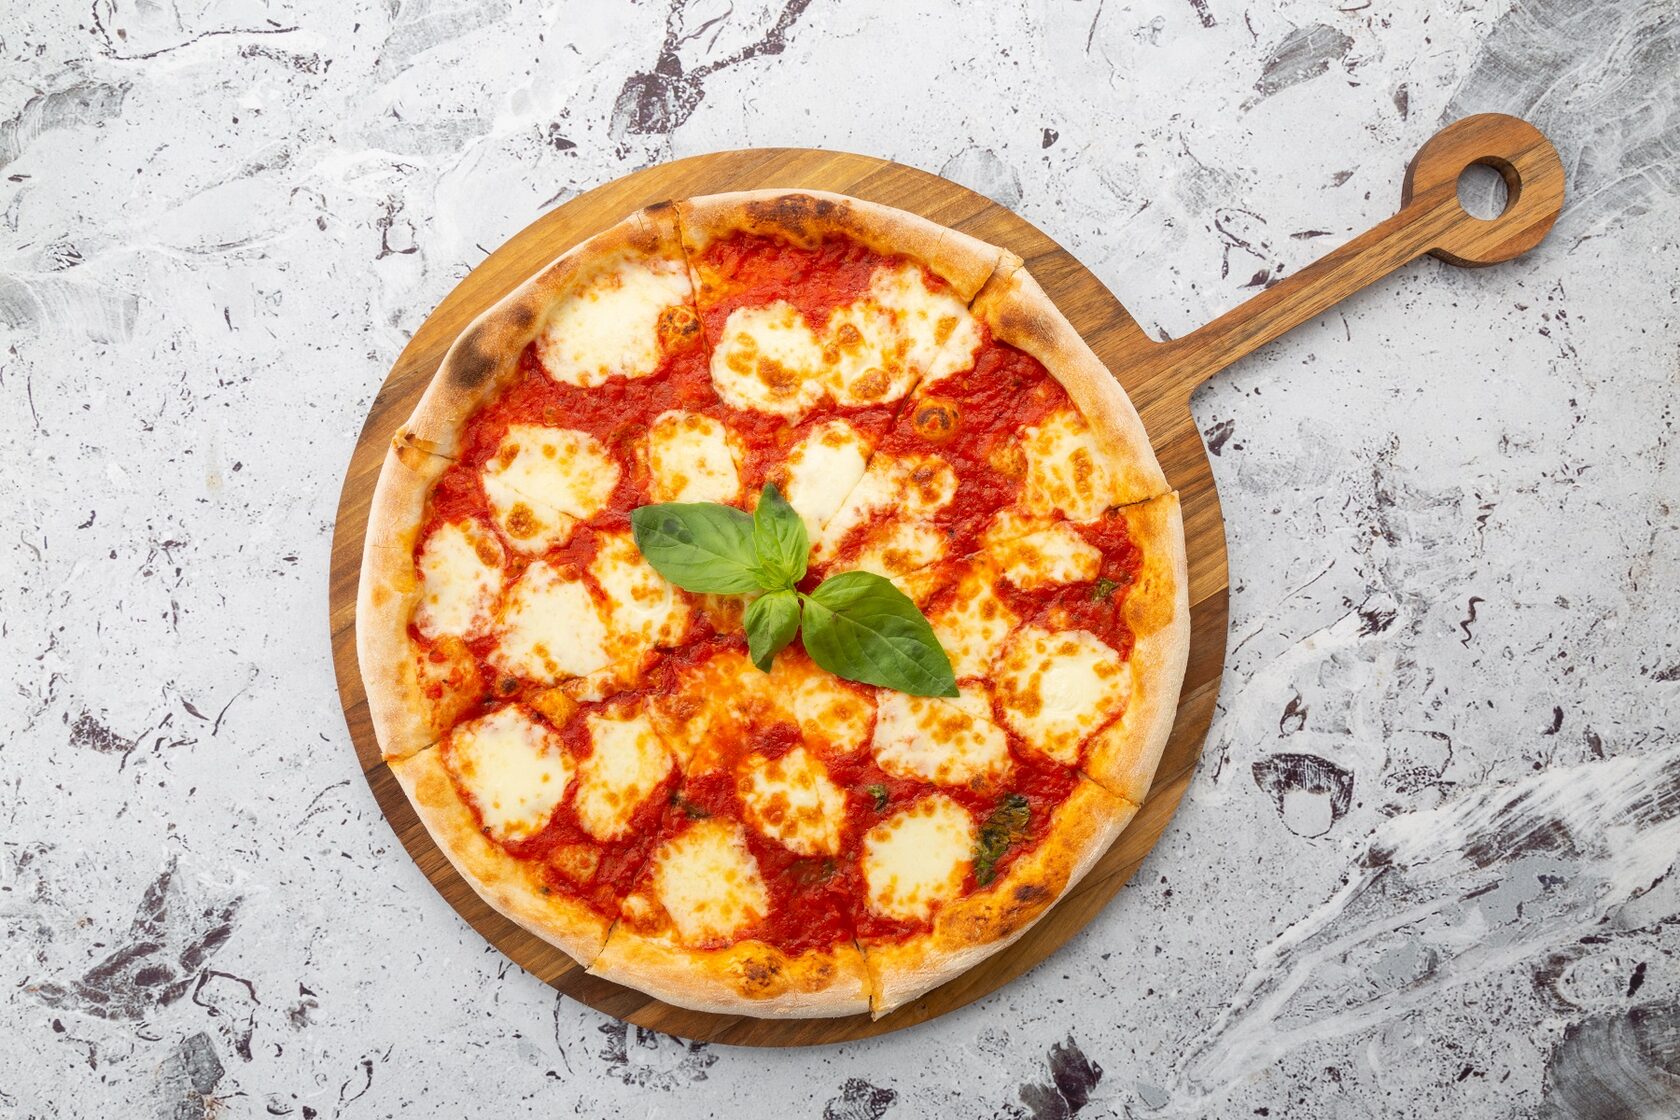 томатный соус на пиццу рецепт с фото фото 107